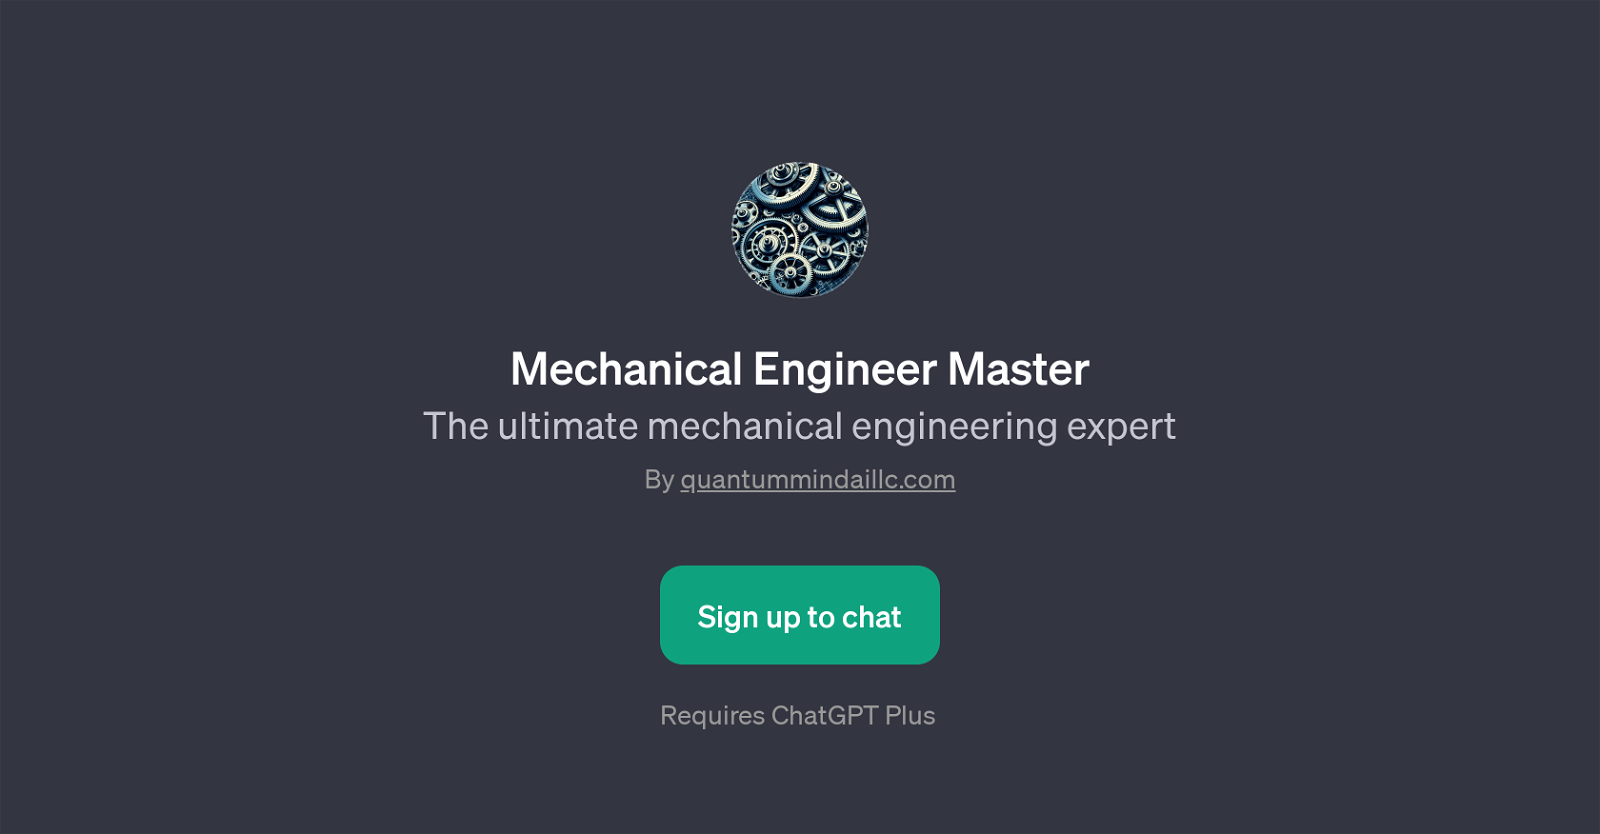 Mechanical Engineer Master website